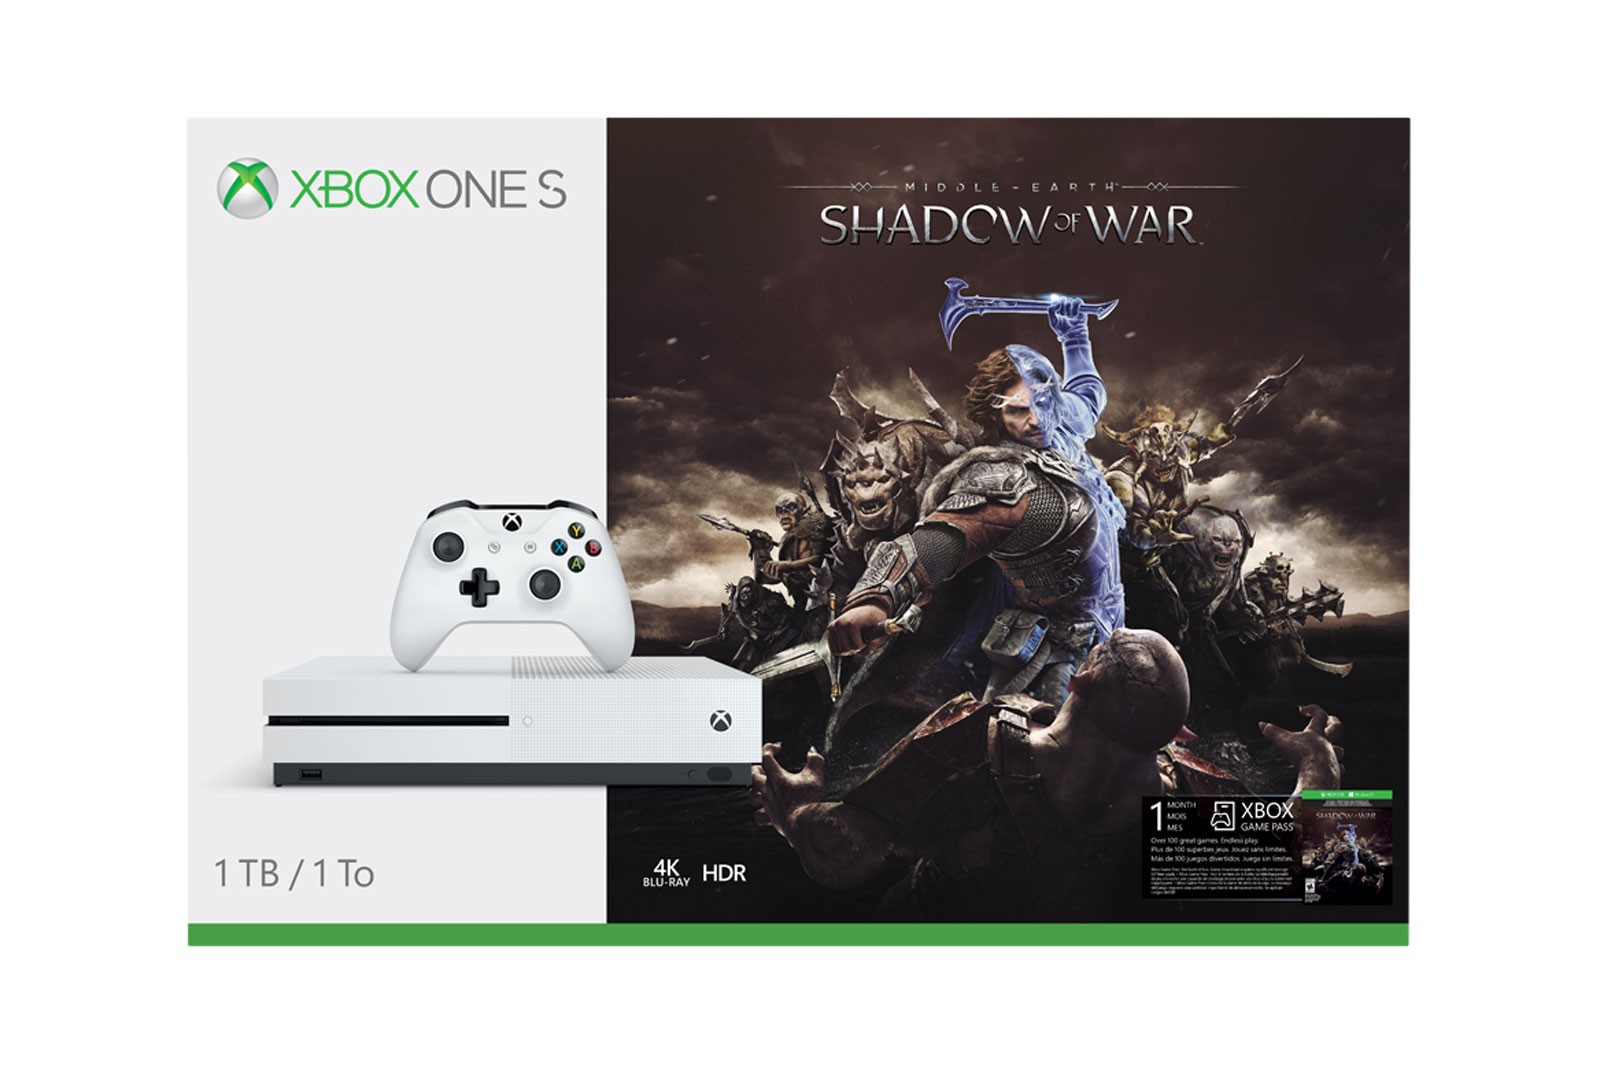 Xbox One S Shadow of War bundle